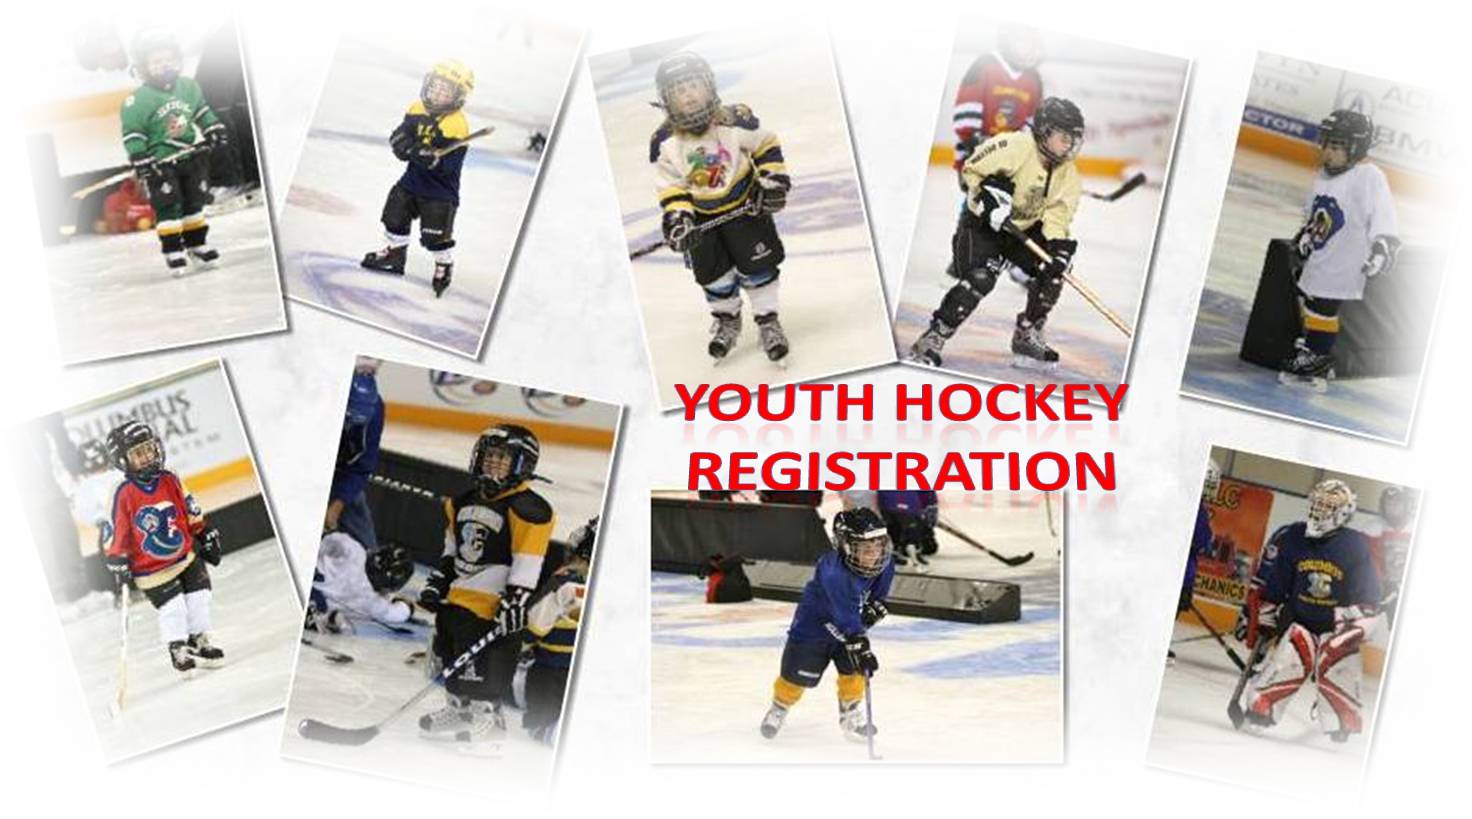 Registration for Youth Winter Hockey Program